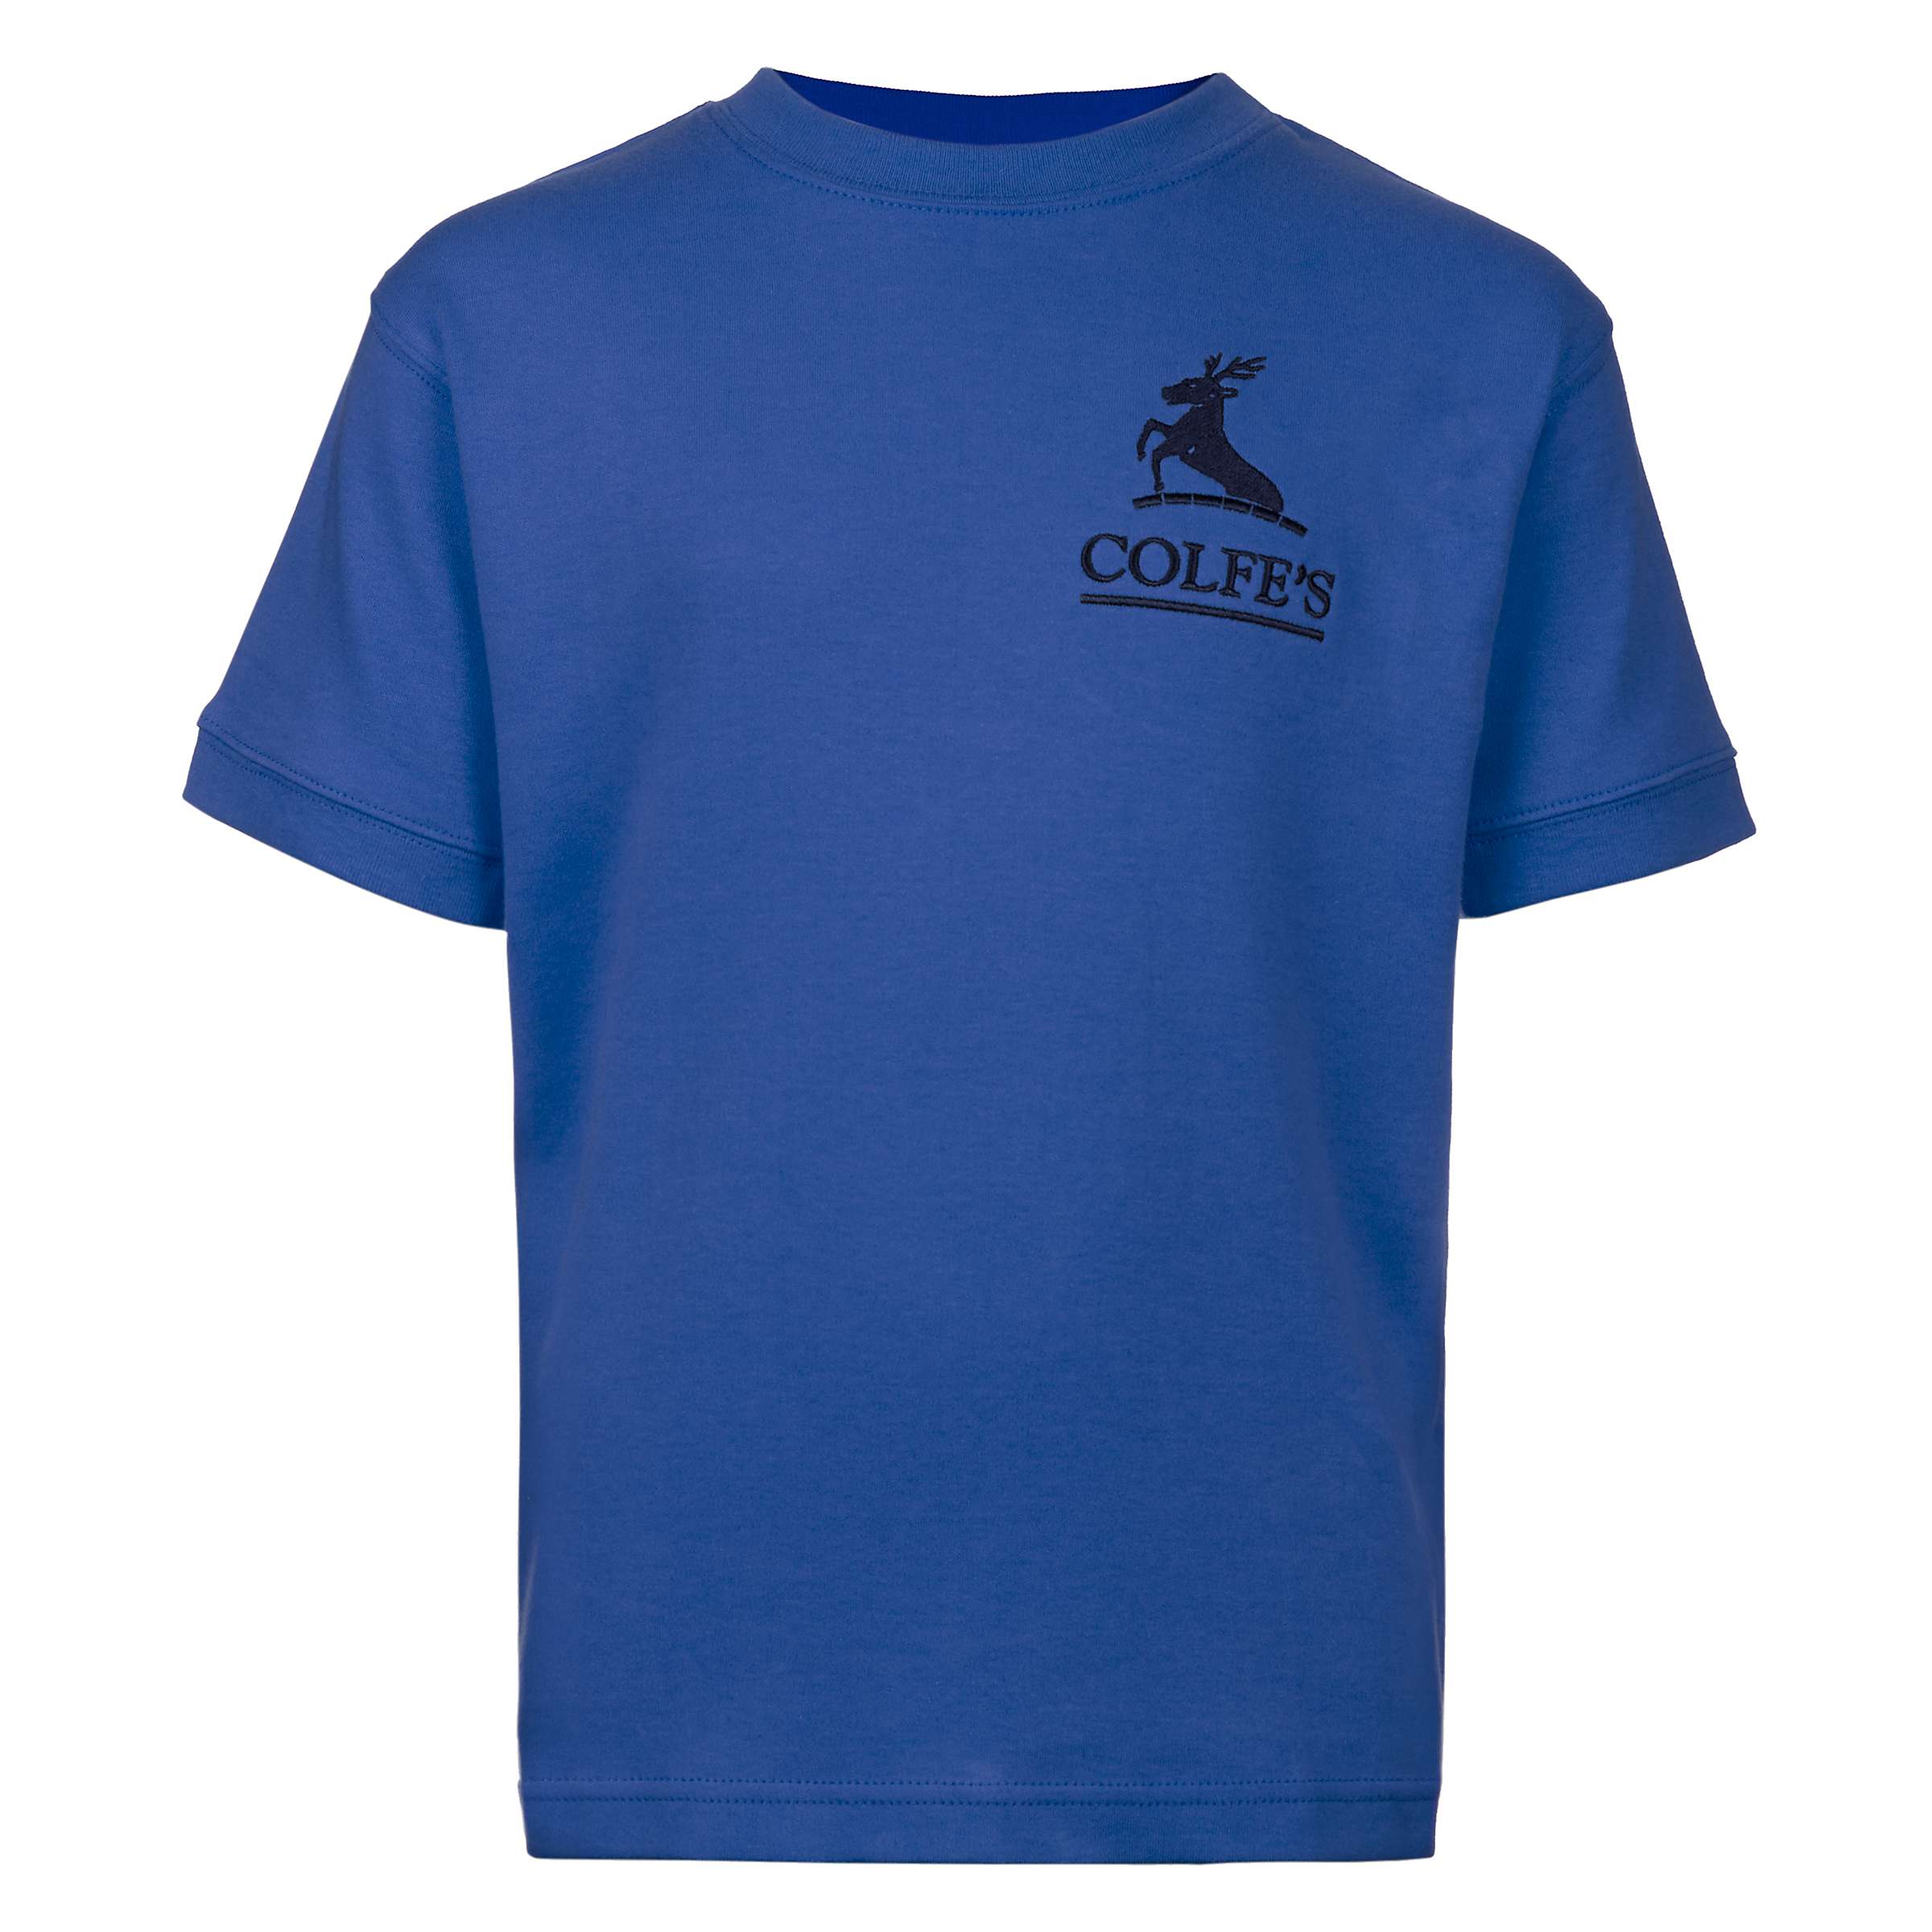 Buy Colfe's School Lynx House T-Shirt, Blue Online at johnlewis.com